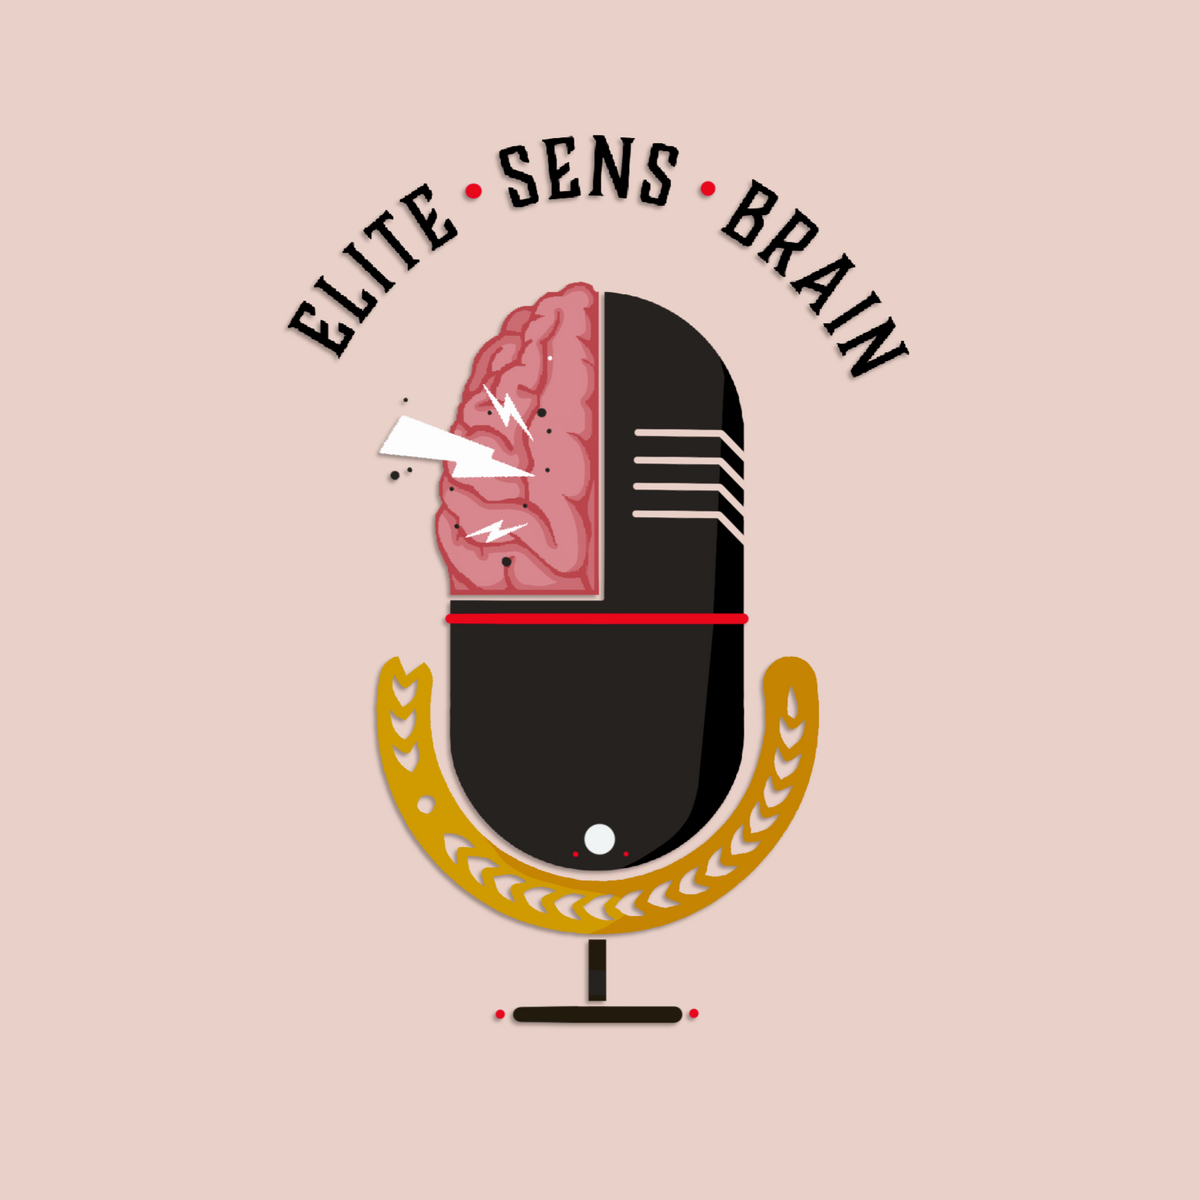 Elite Sens Brain, Episode 8: Elite Oily Brain (feat. @oilygifs)